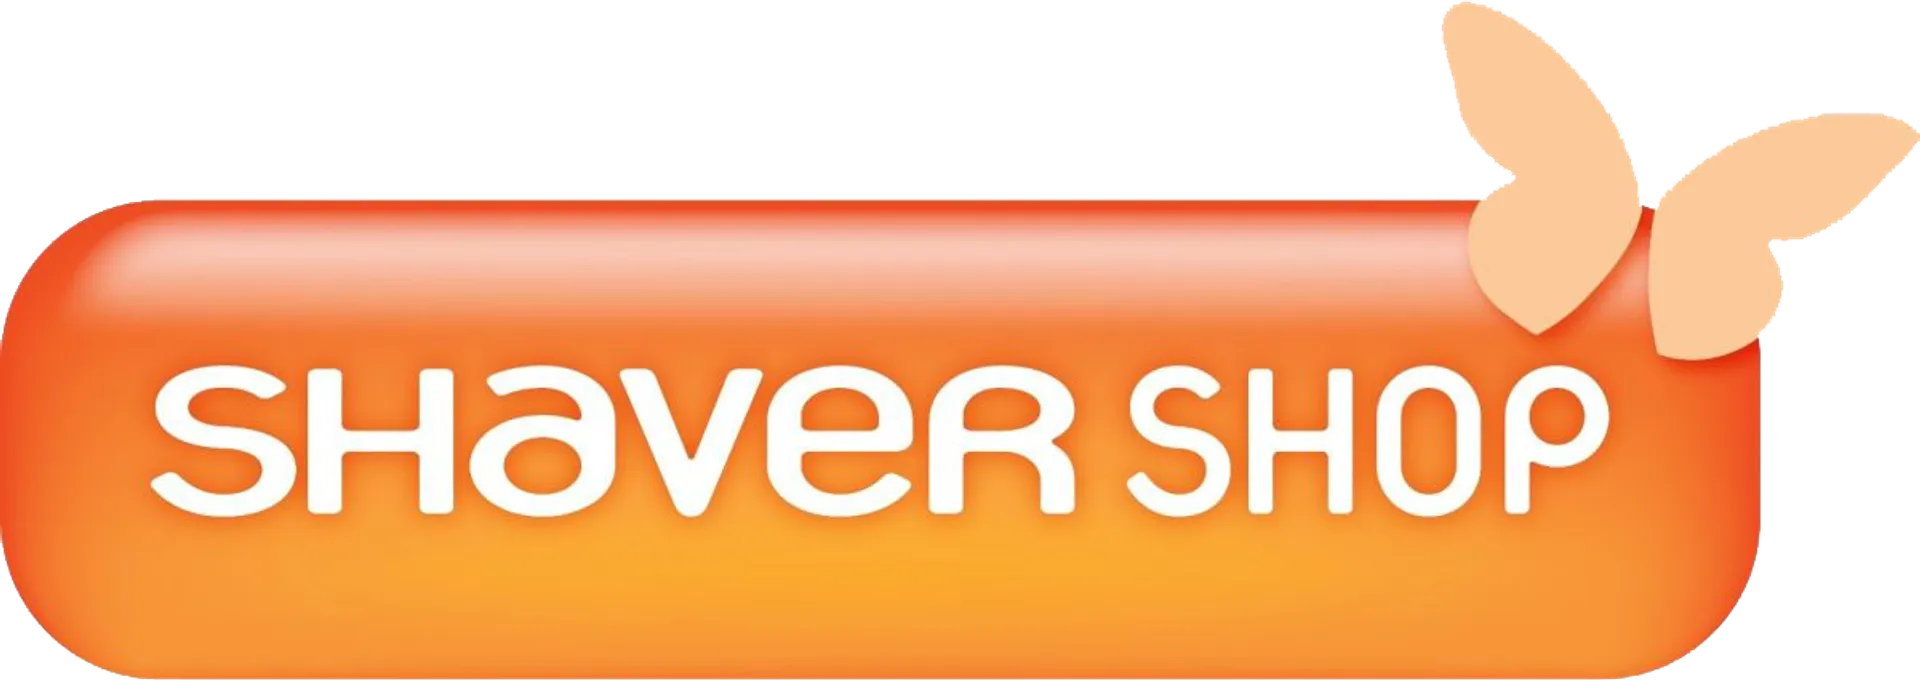 SHAVER SHOP logo